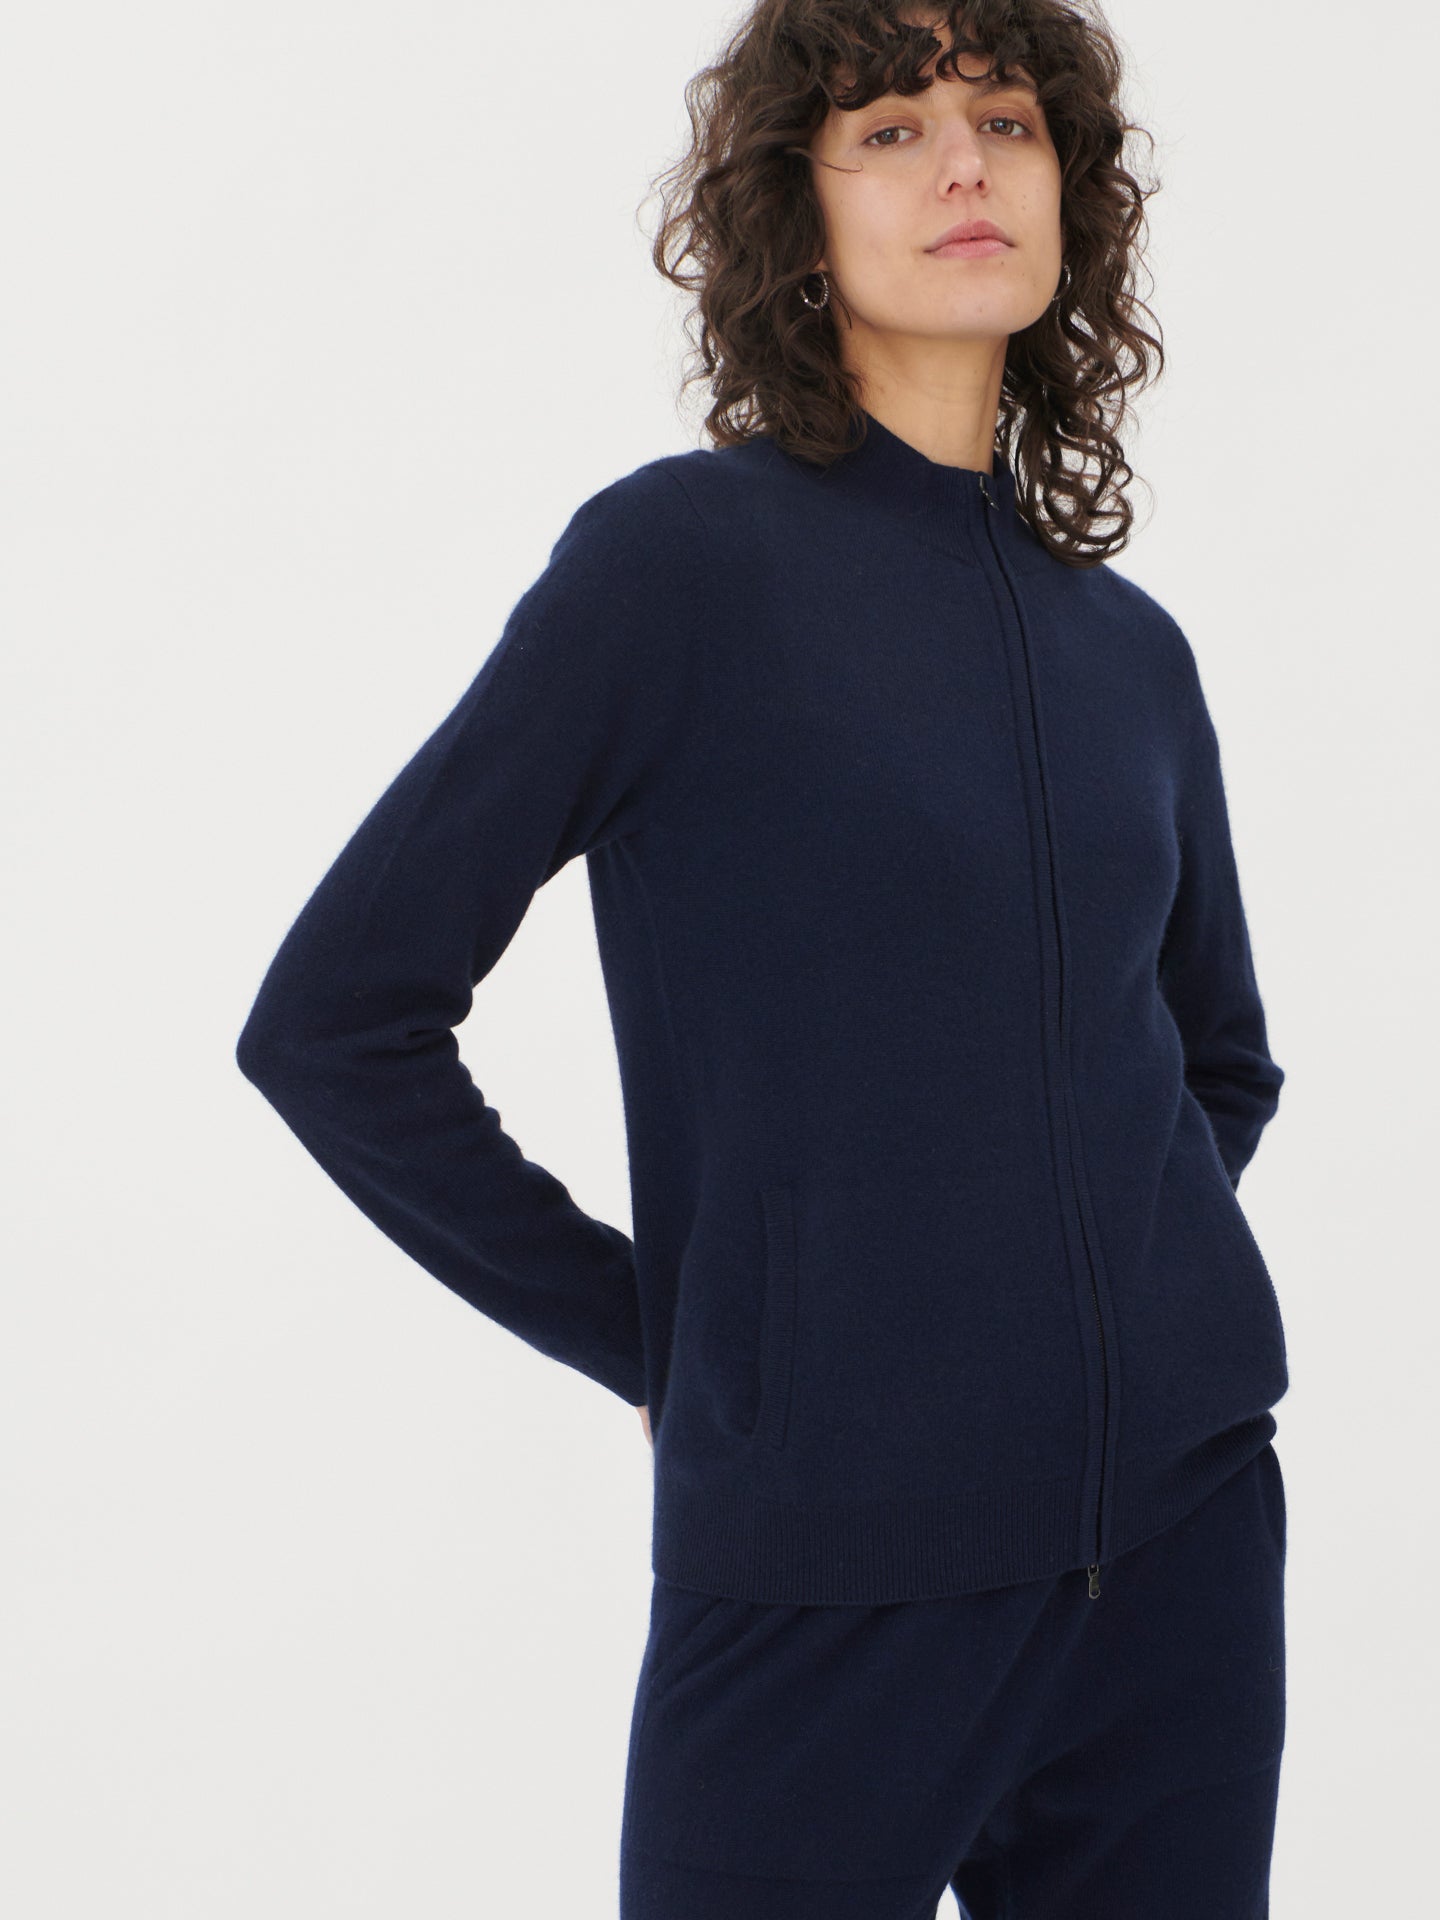 Women's Cashmere Full-Zip Hoodie Navy - Gobi Cashmere, 2XL / Light Blue / WK07-520